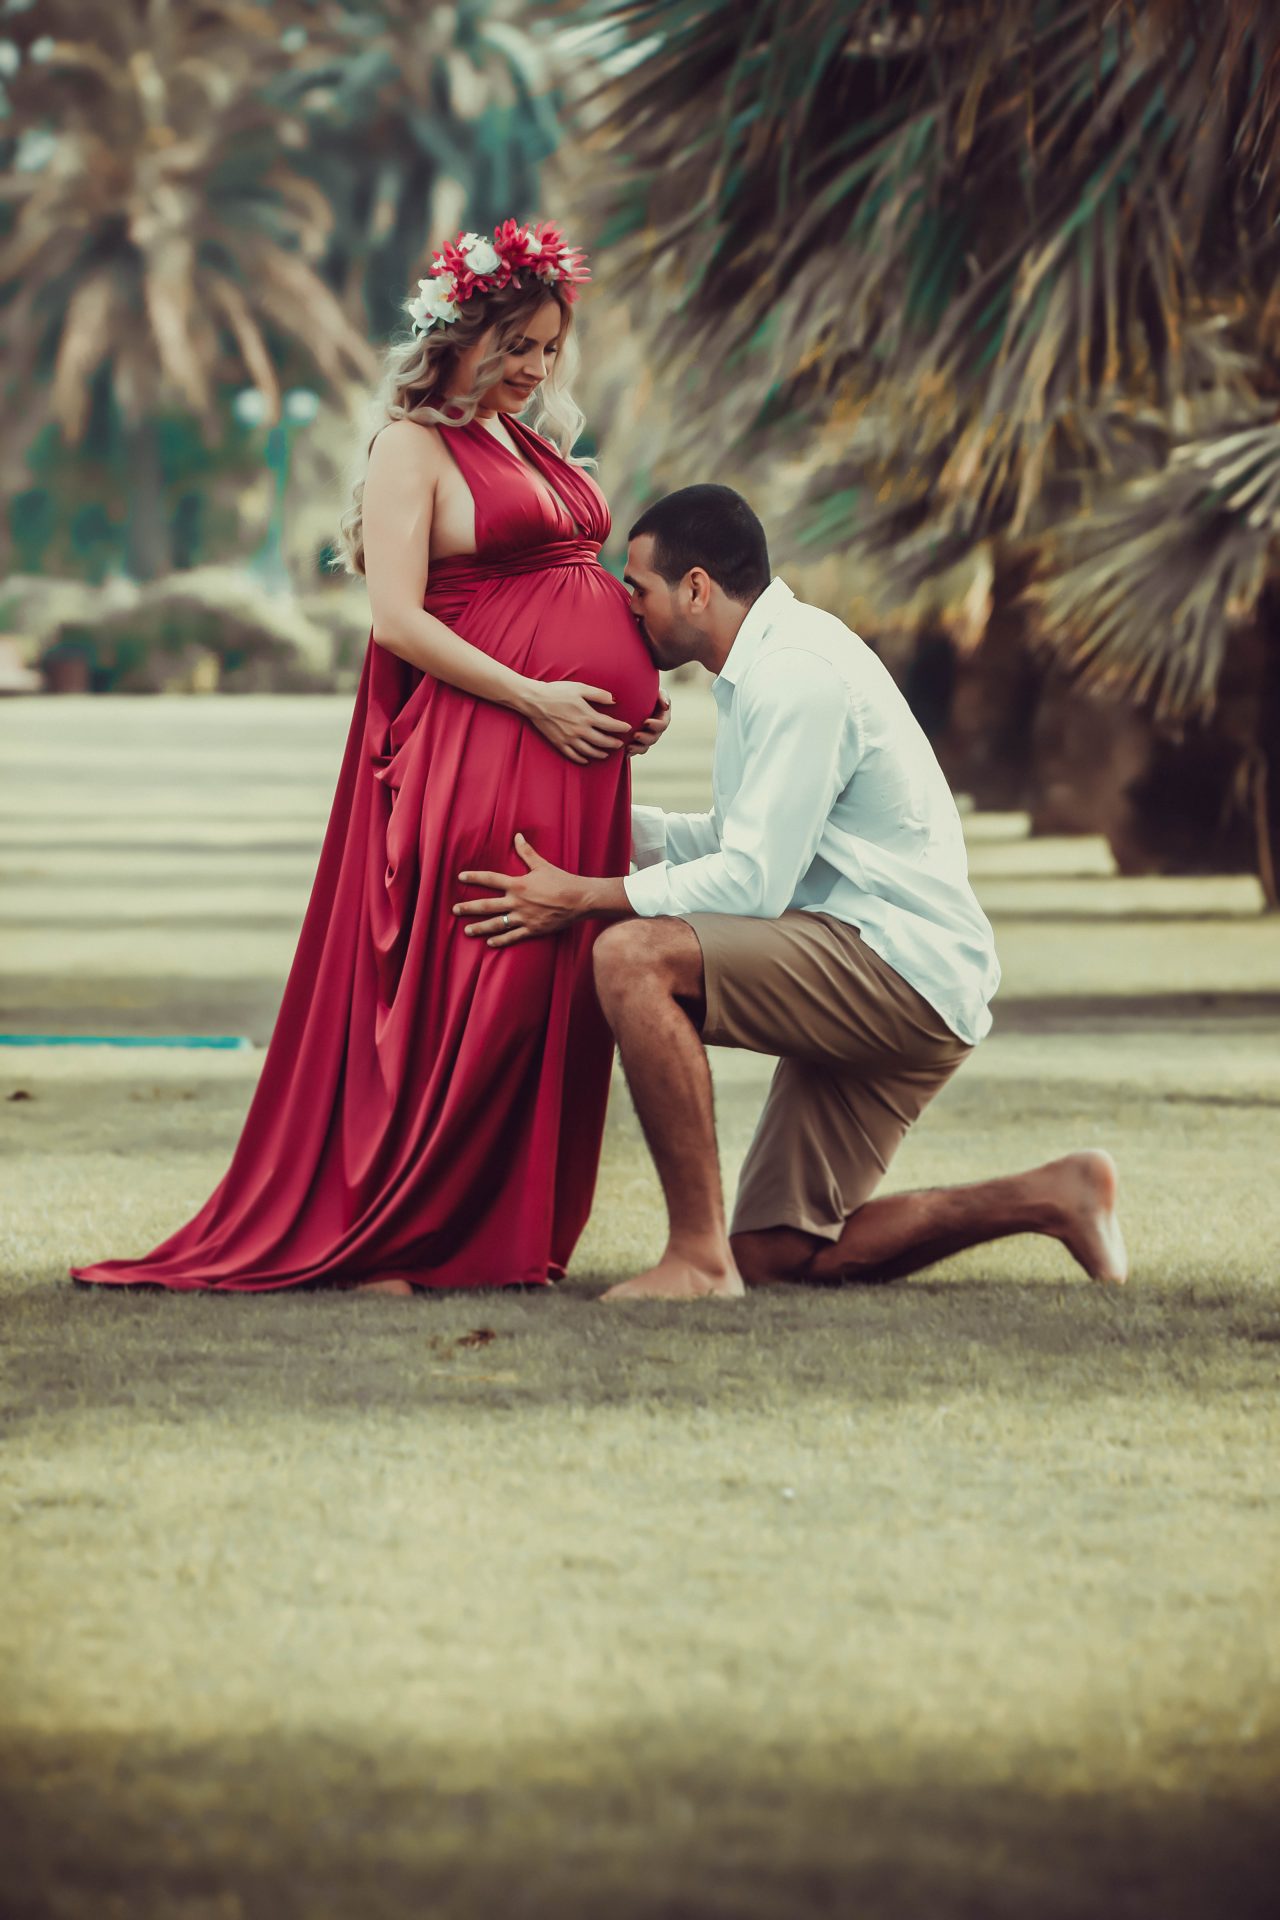 Prepare for a professional maternity-Pregnancy photo session